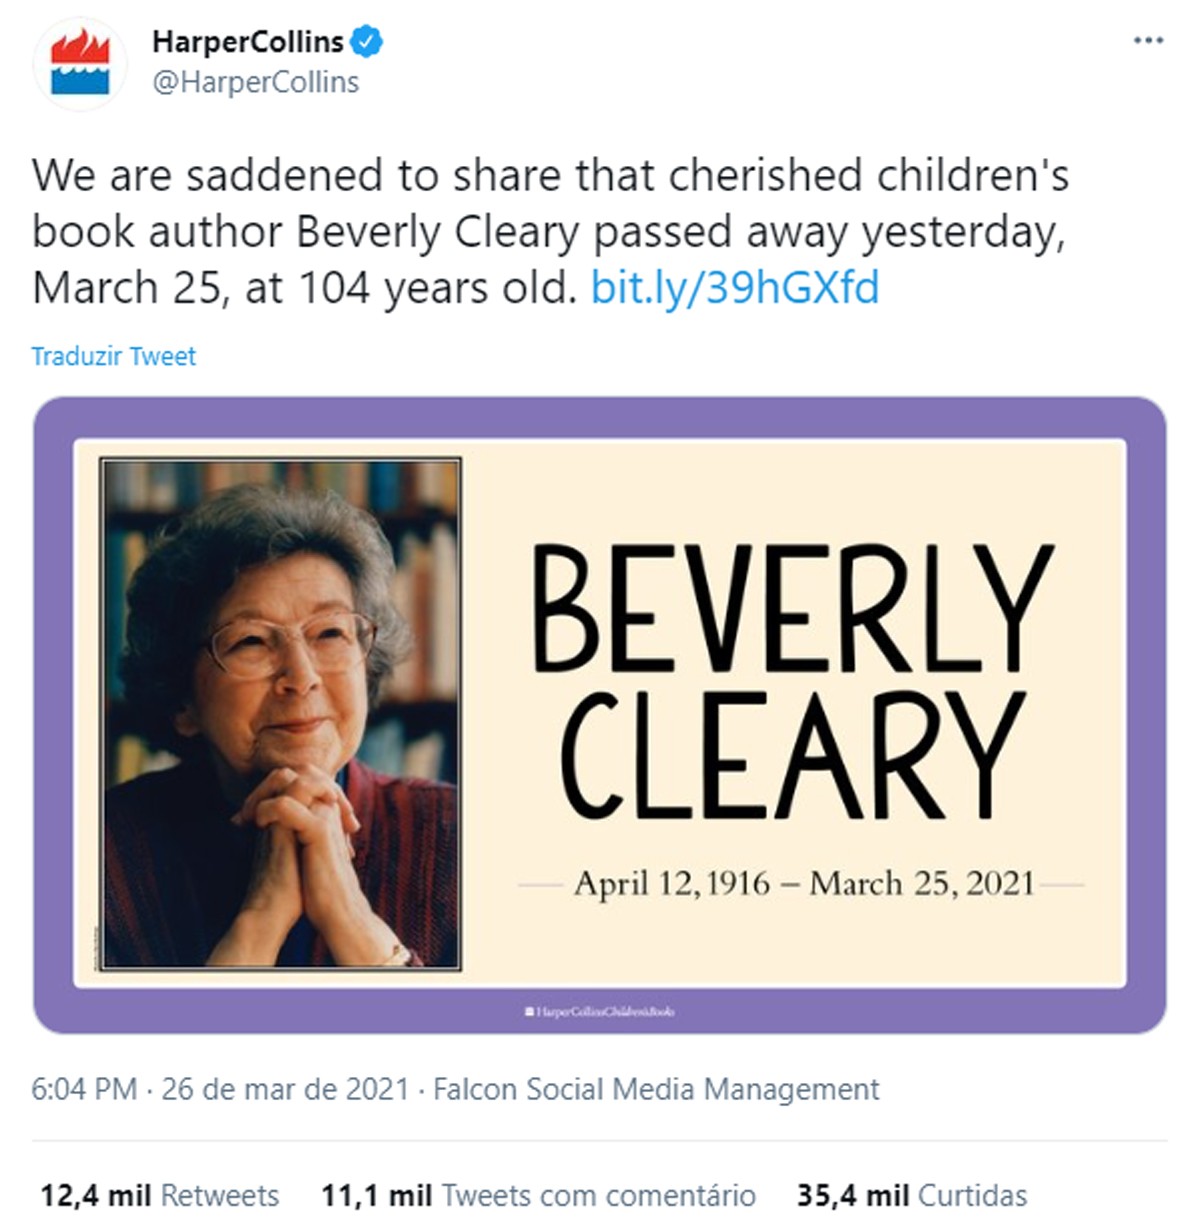 Editora HarperCollins anuncia morte da autora Beverly Cleary (Foto: Reprodução/Twitter)